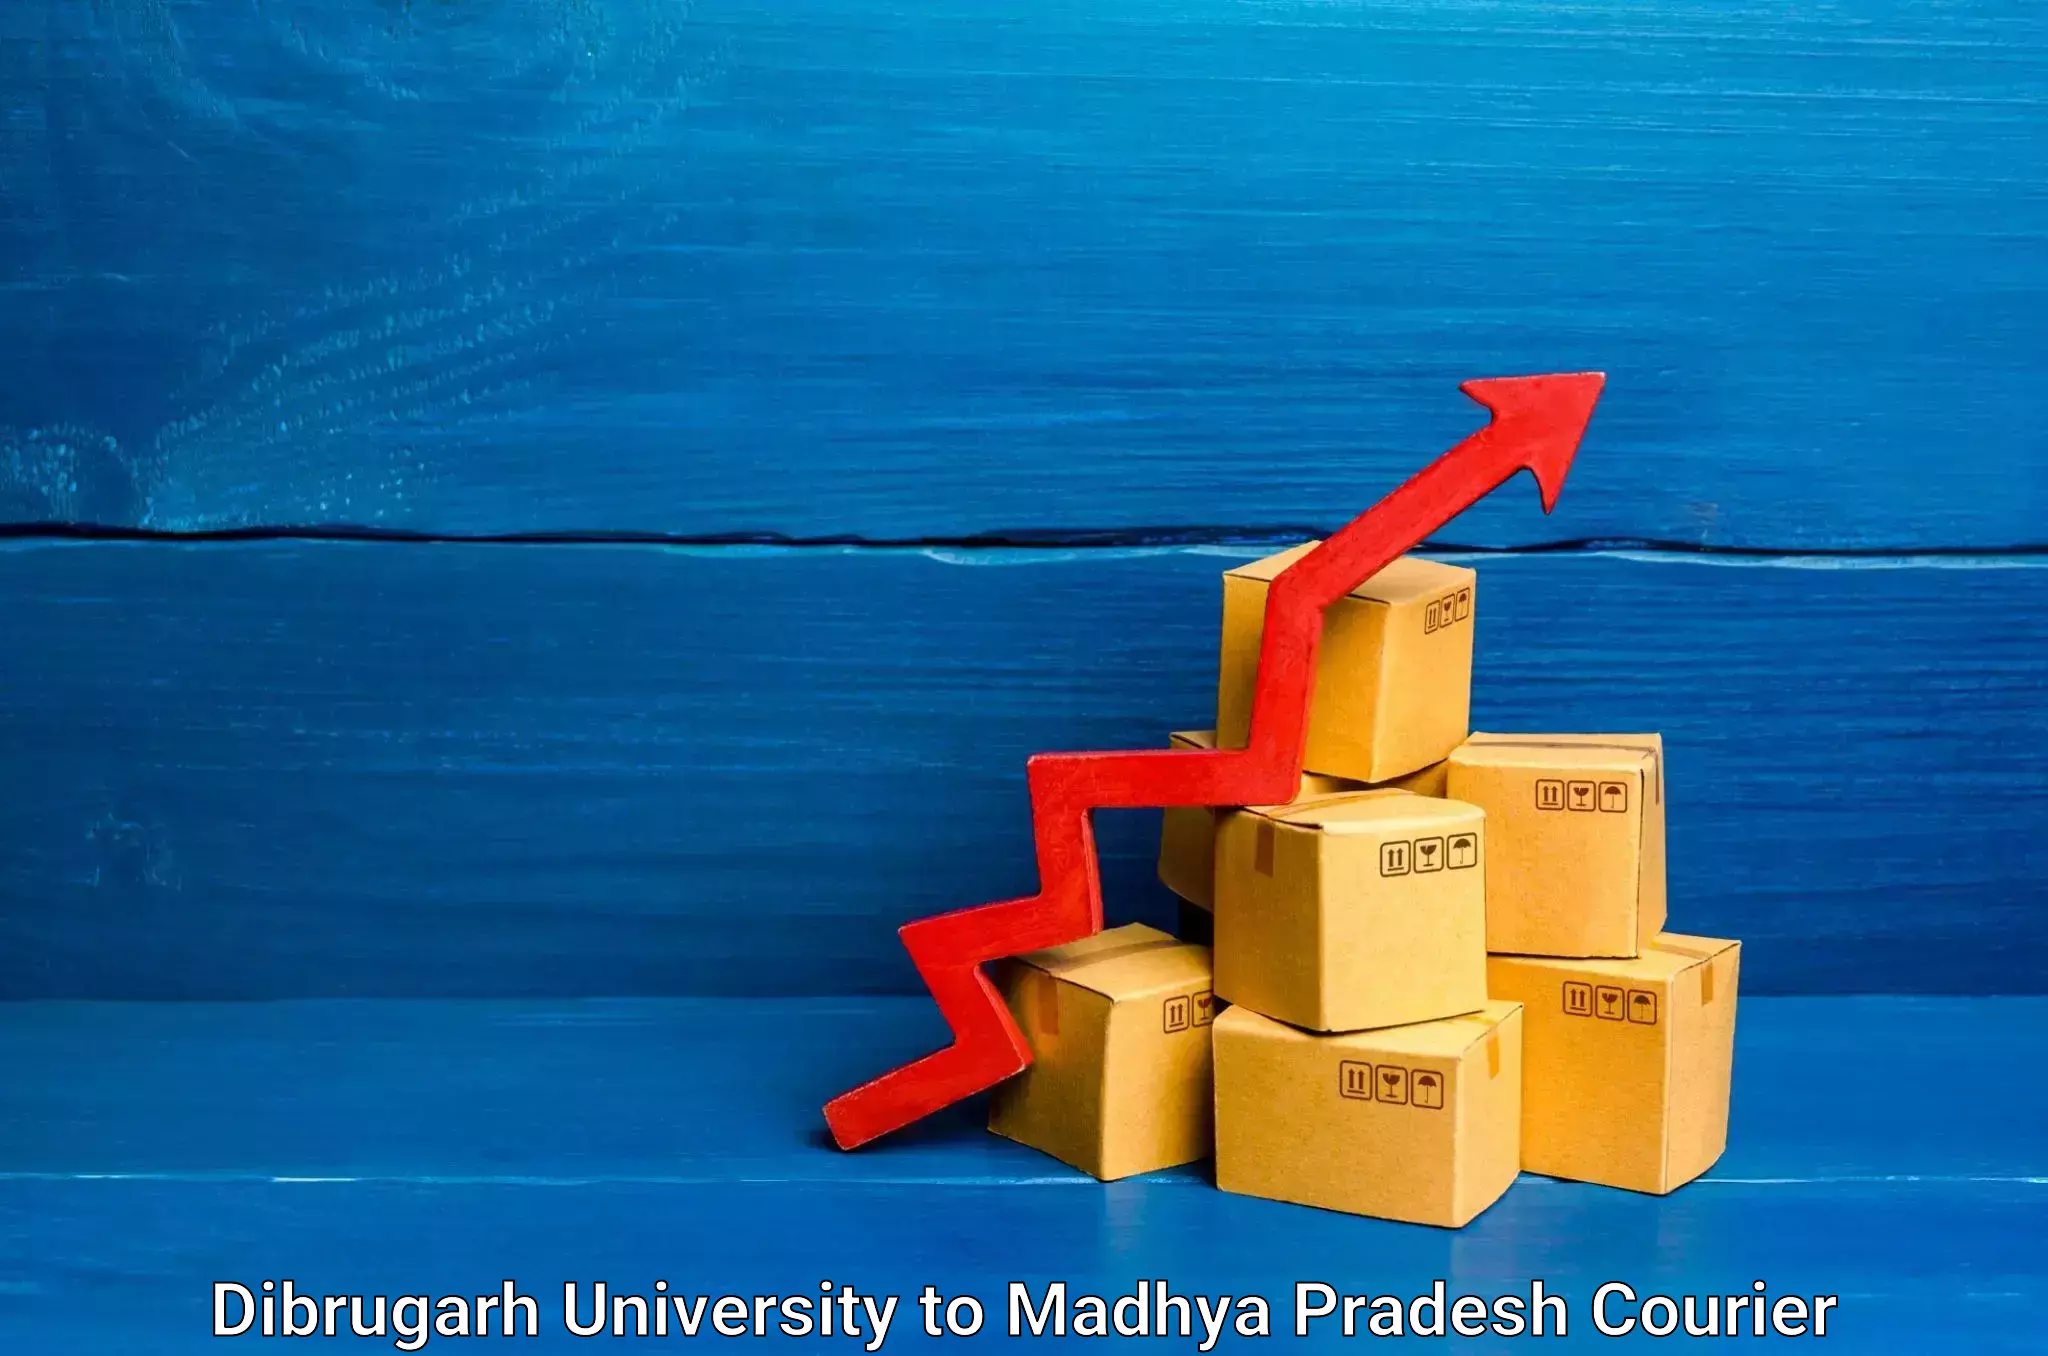 Express shipping Dibrugarh University to Shujalpur